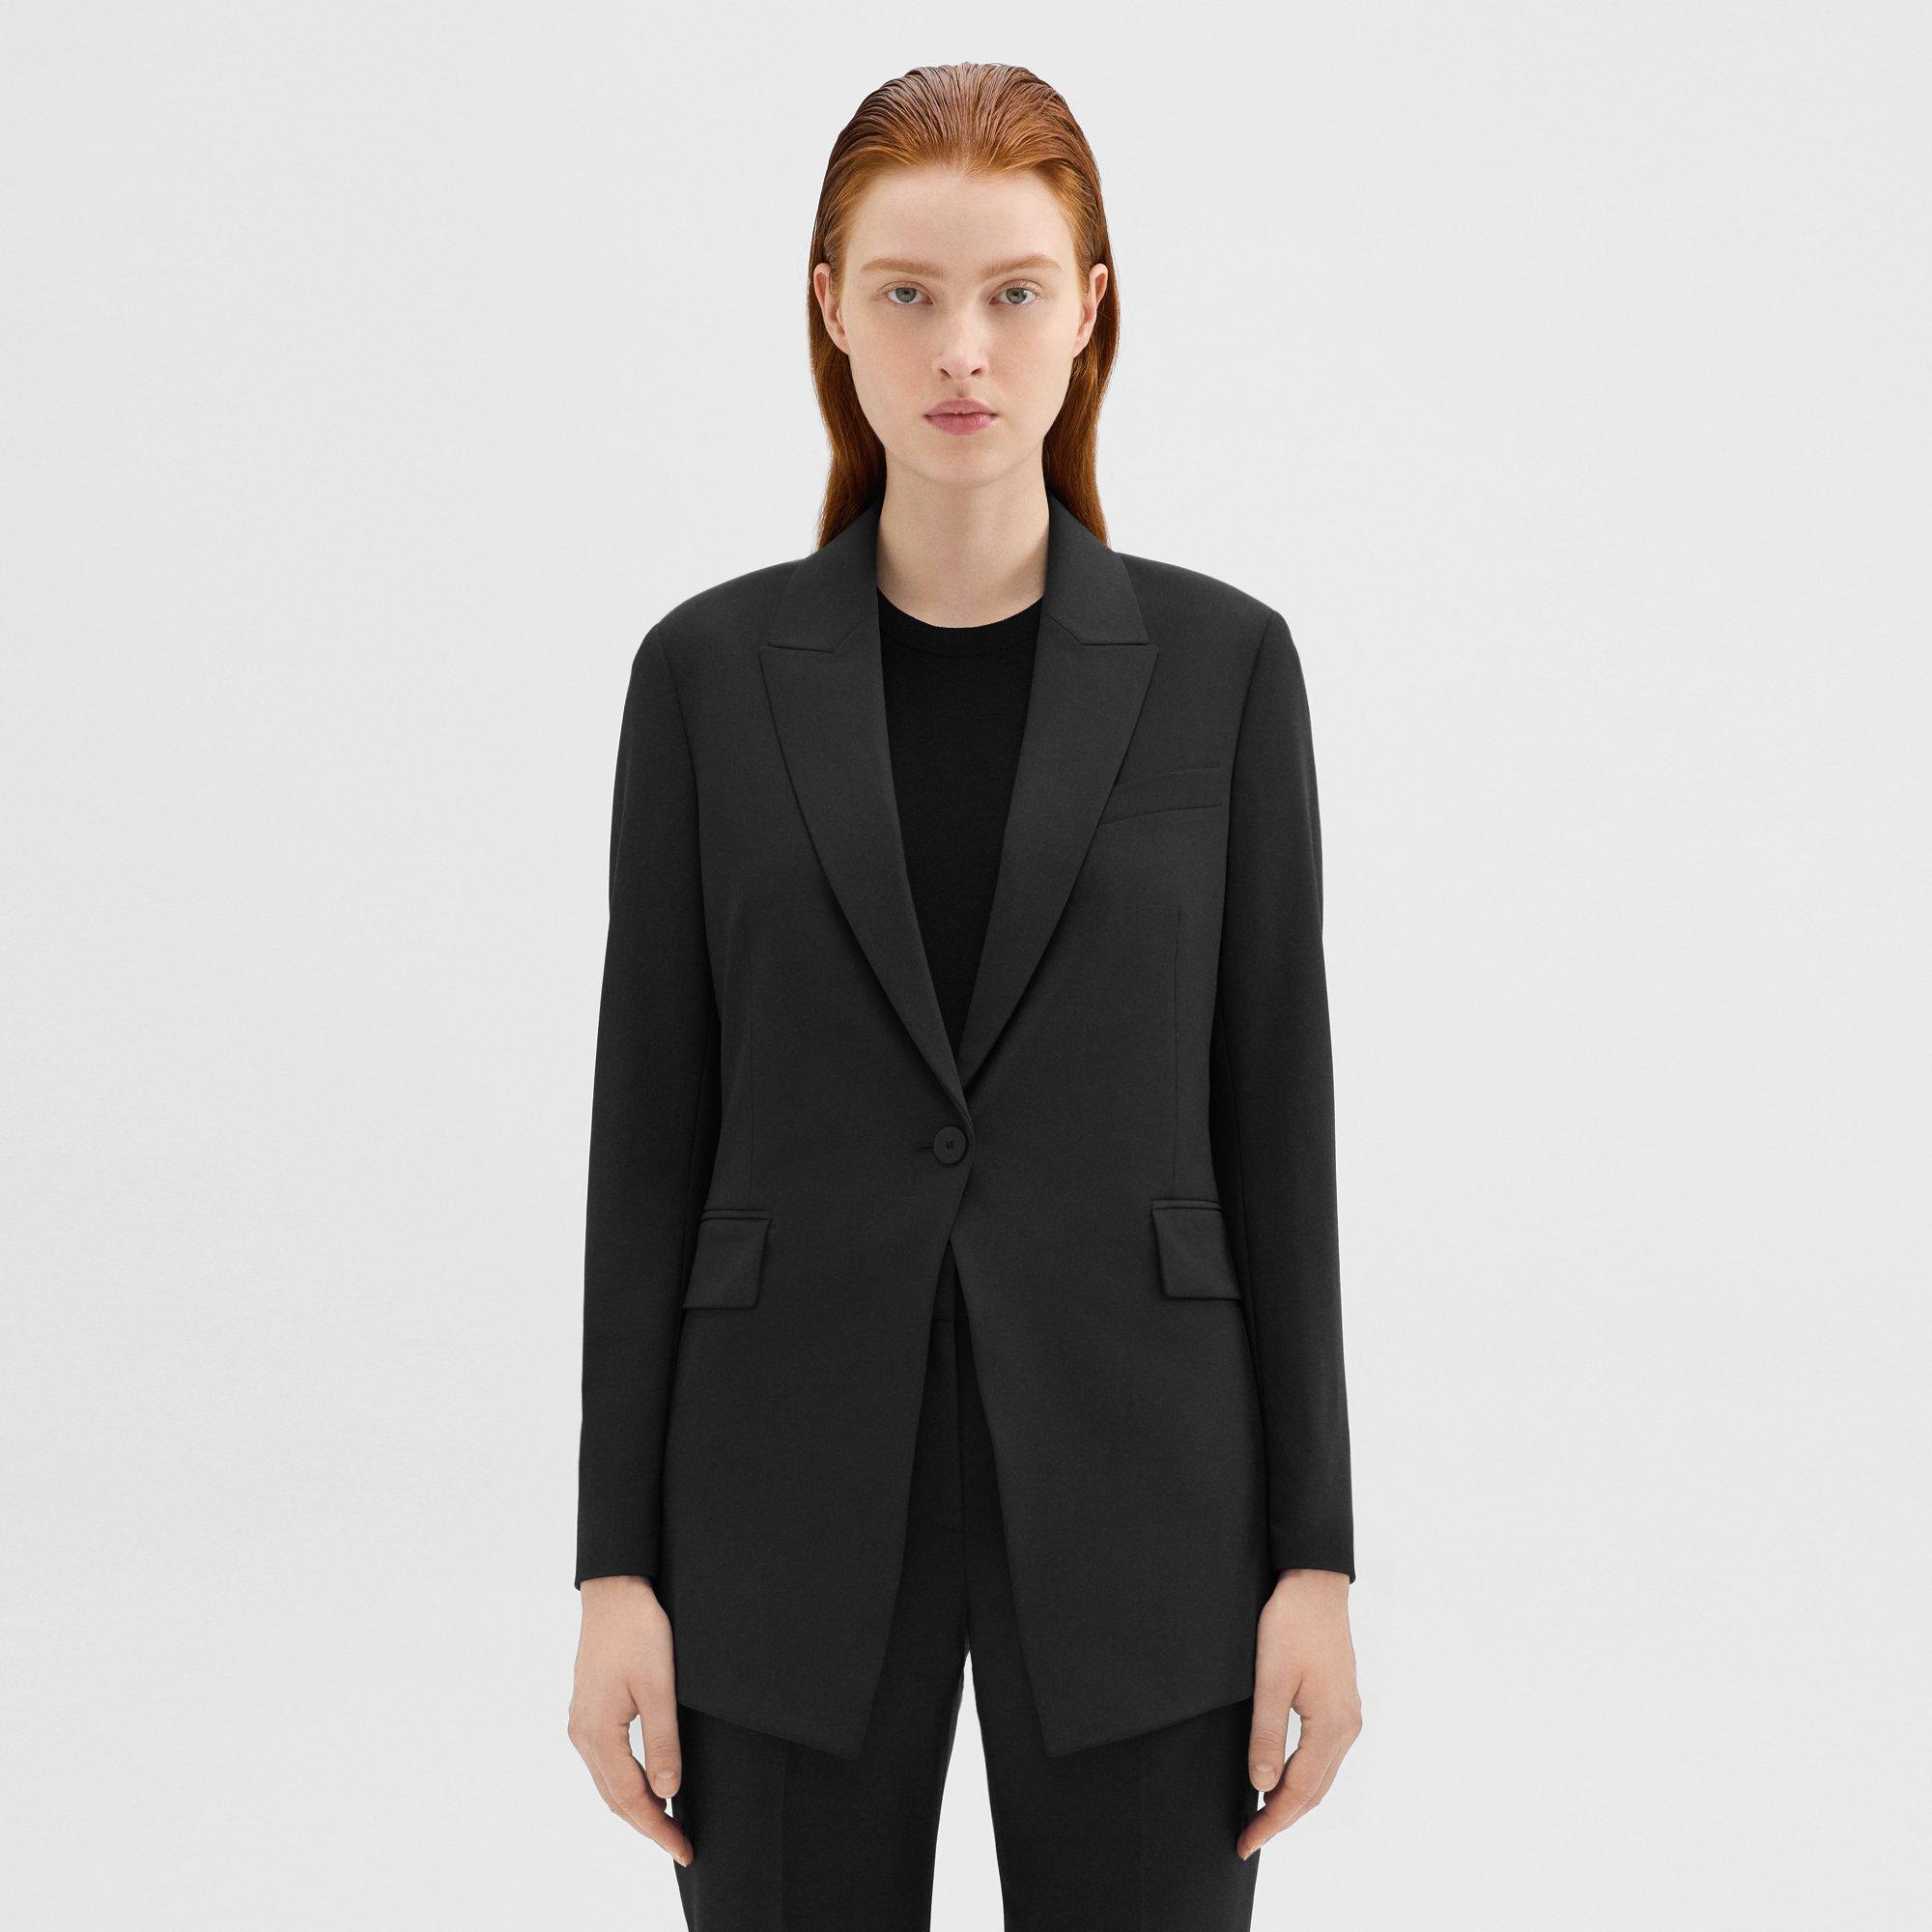 Black Slacks Dark Grey Blazer Women Dark Grey Suit | Centre for Policy ...